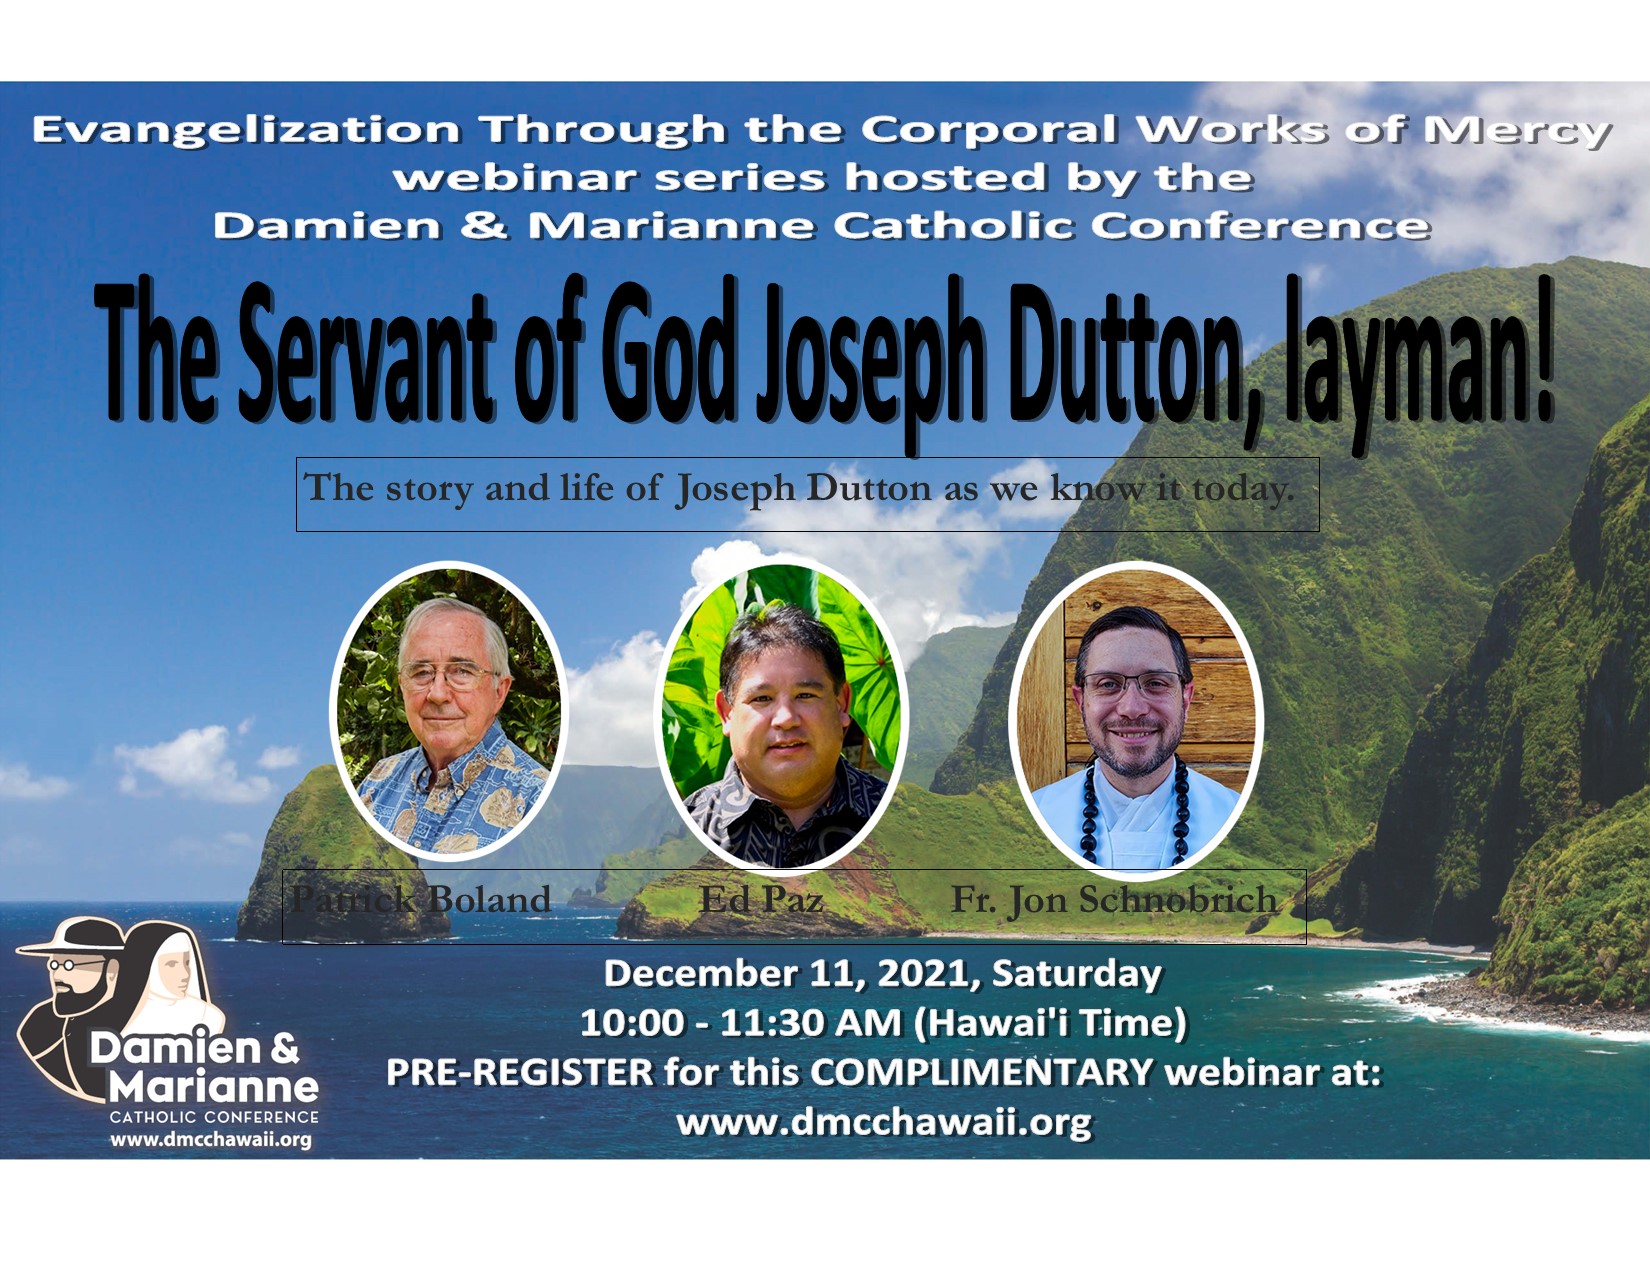 The Servant of God: Joseph Dutton, Layman!